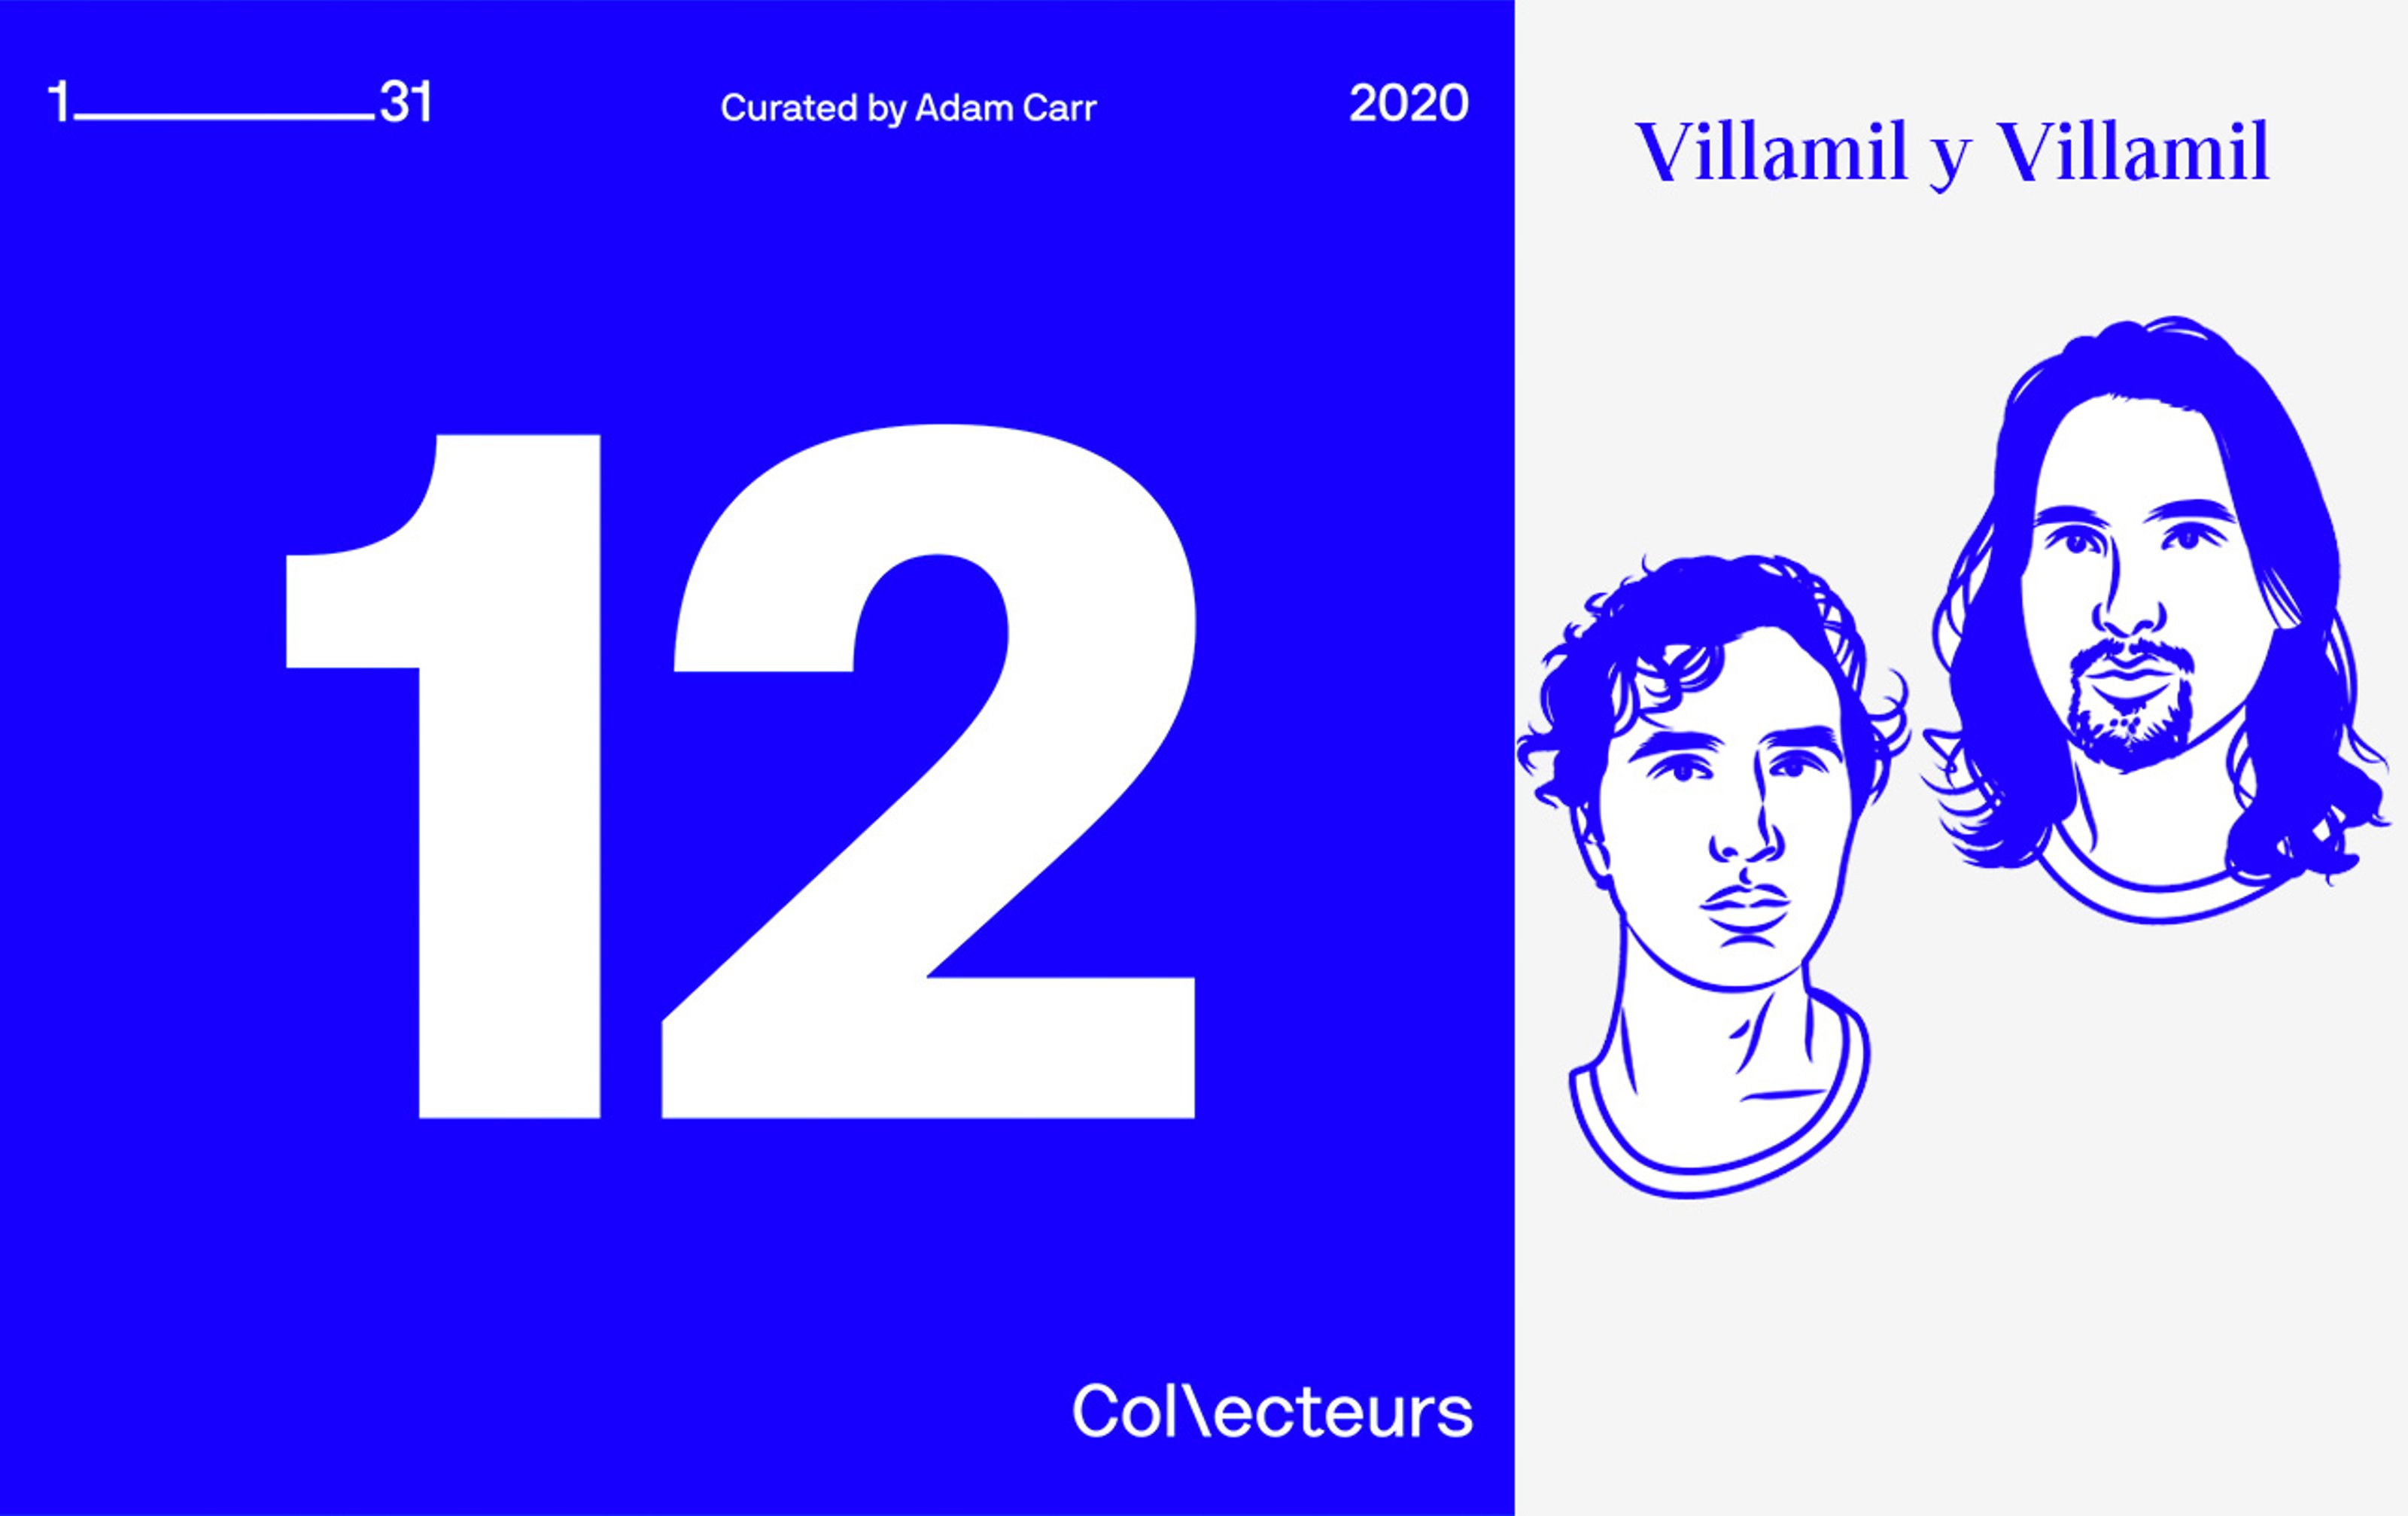 12 - Illustrated portraits of the artist duo, Villamil y Villamil